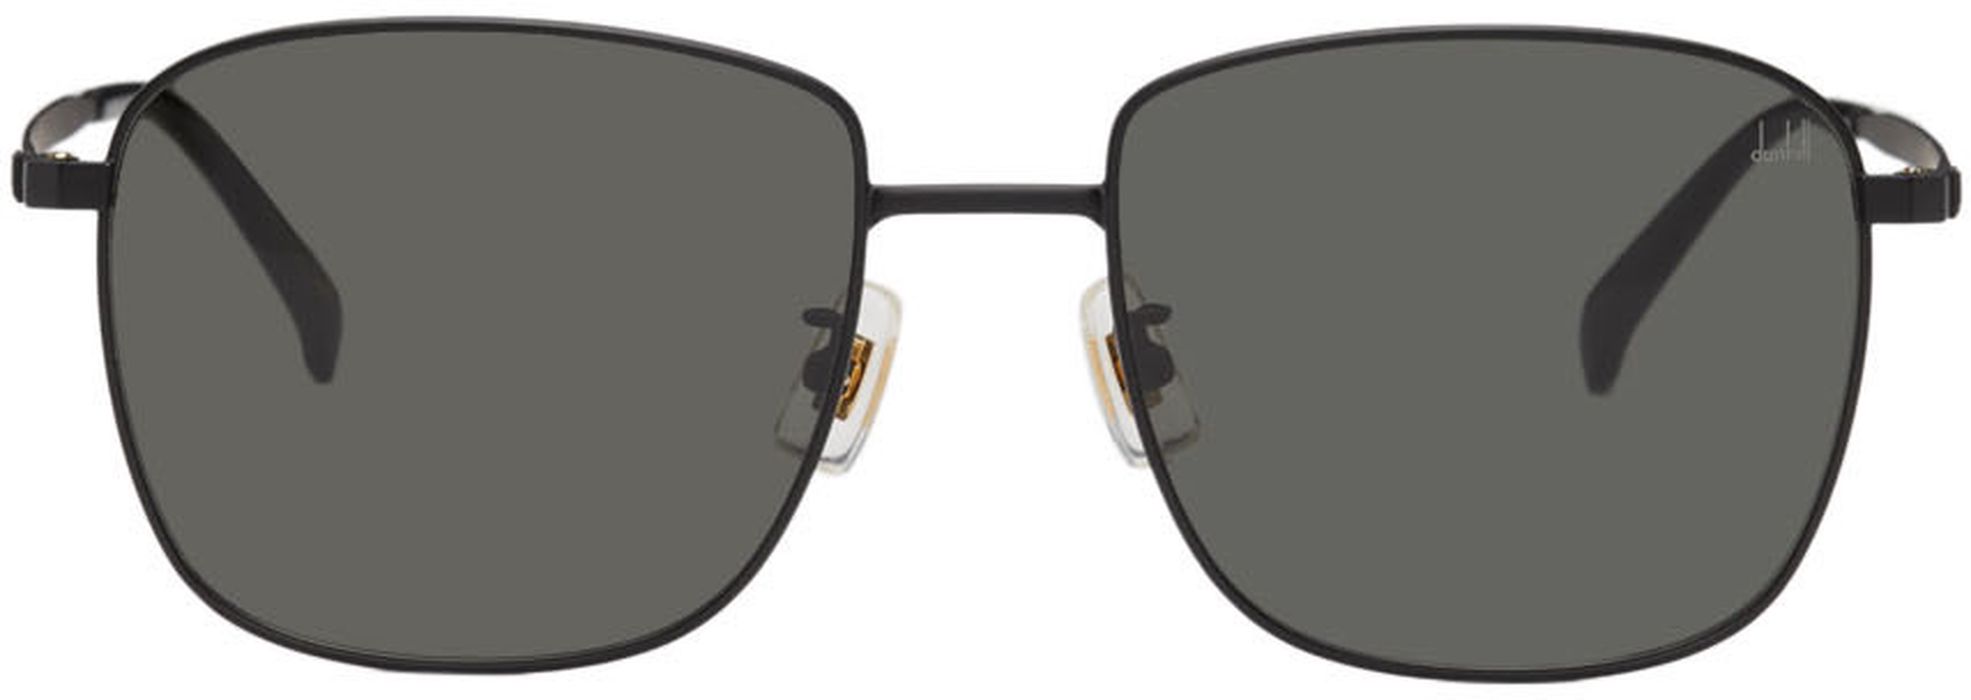 Dunhill Black Square-Framed Sunglasses